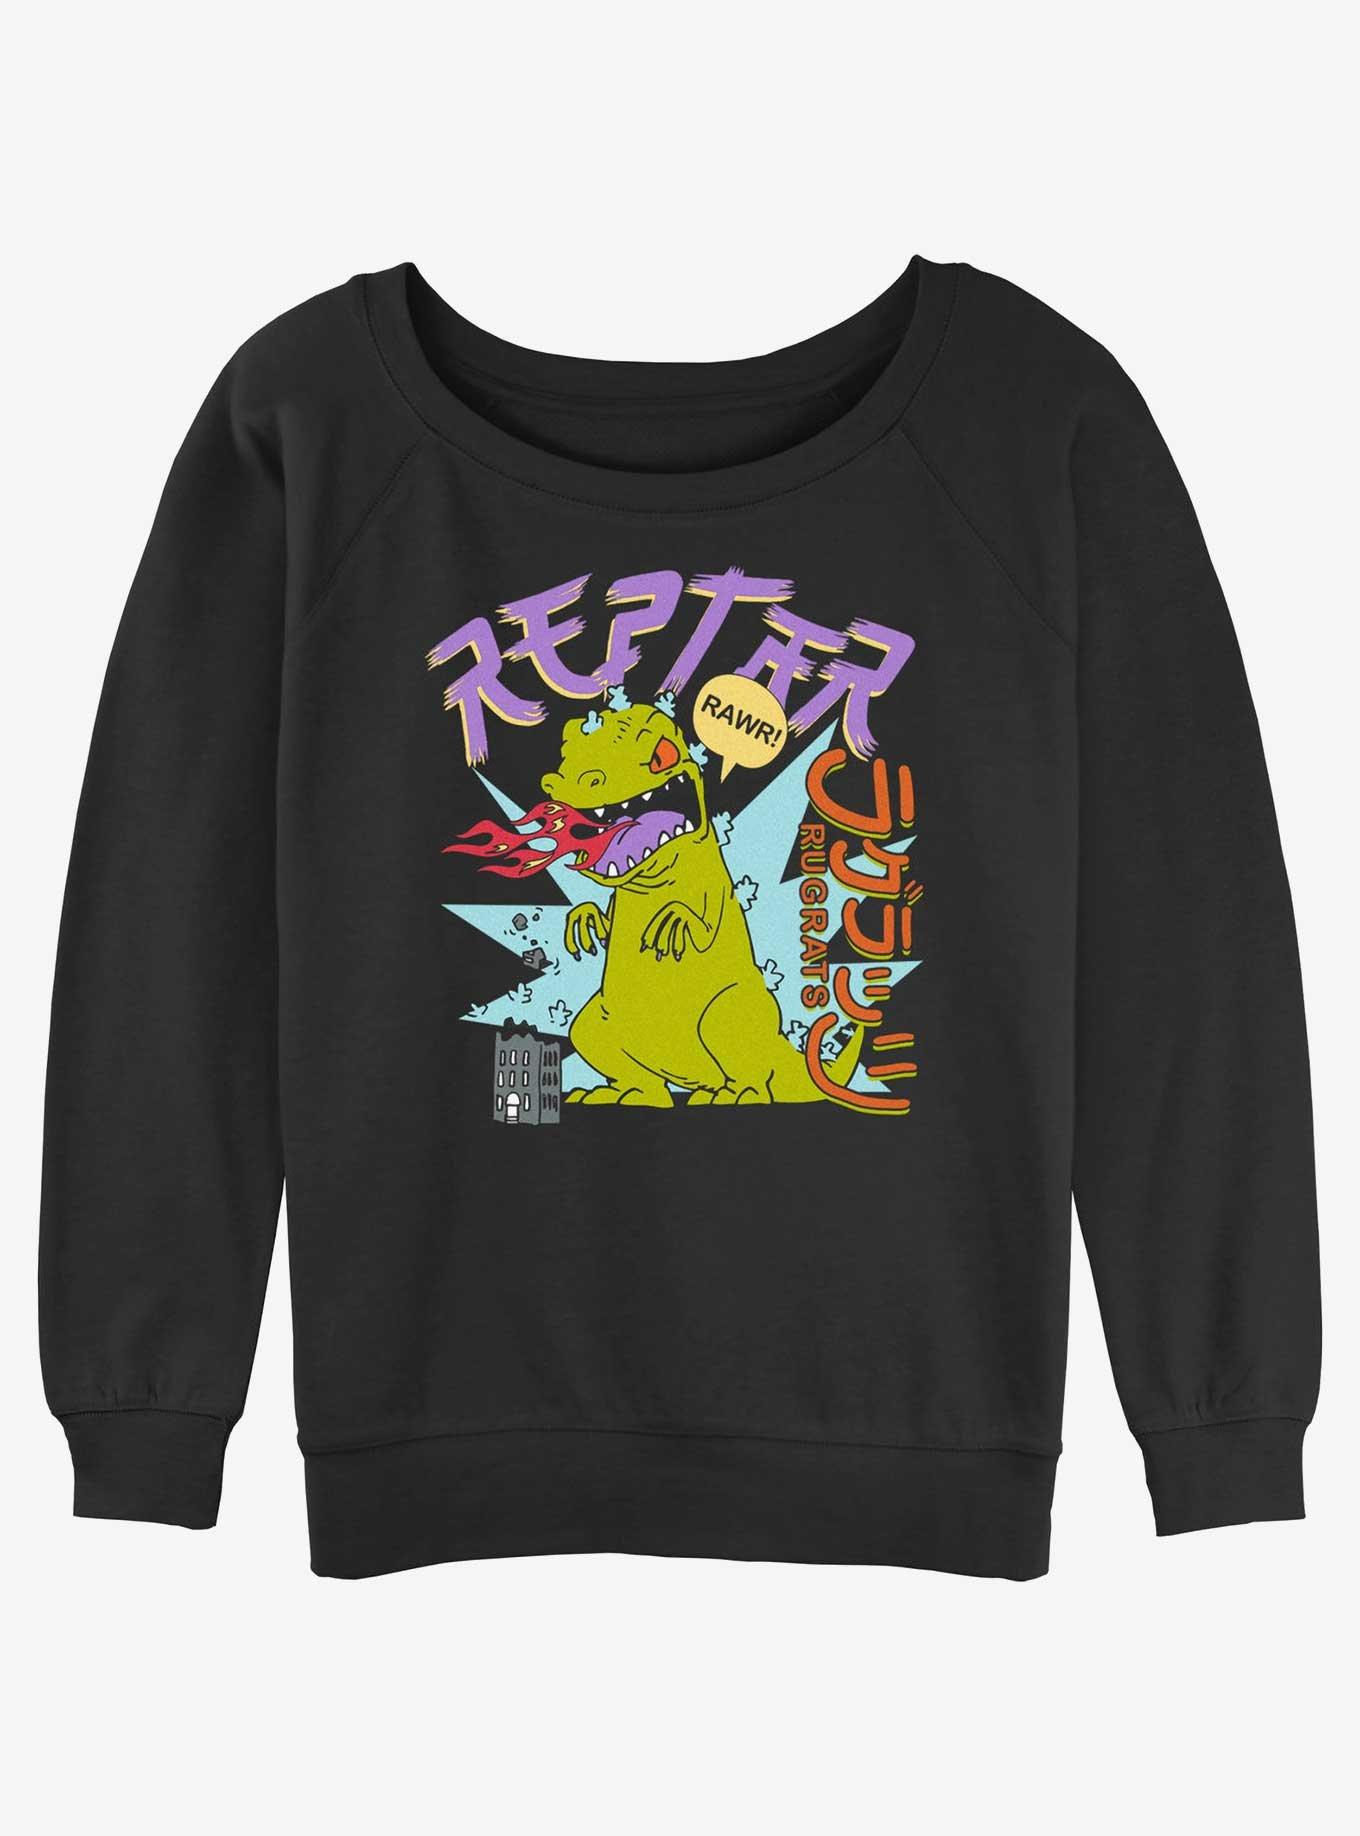 Rugrats Reptar Rawr Girls Slouchy Sweatshirt